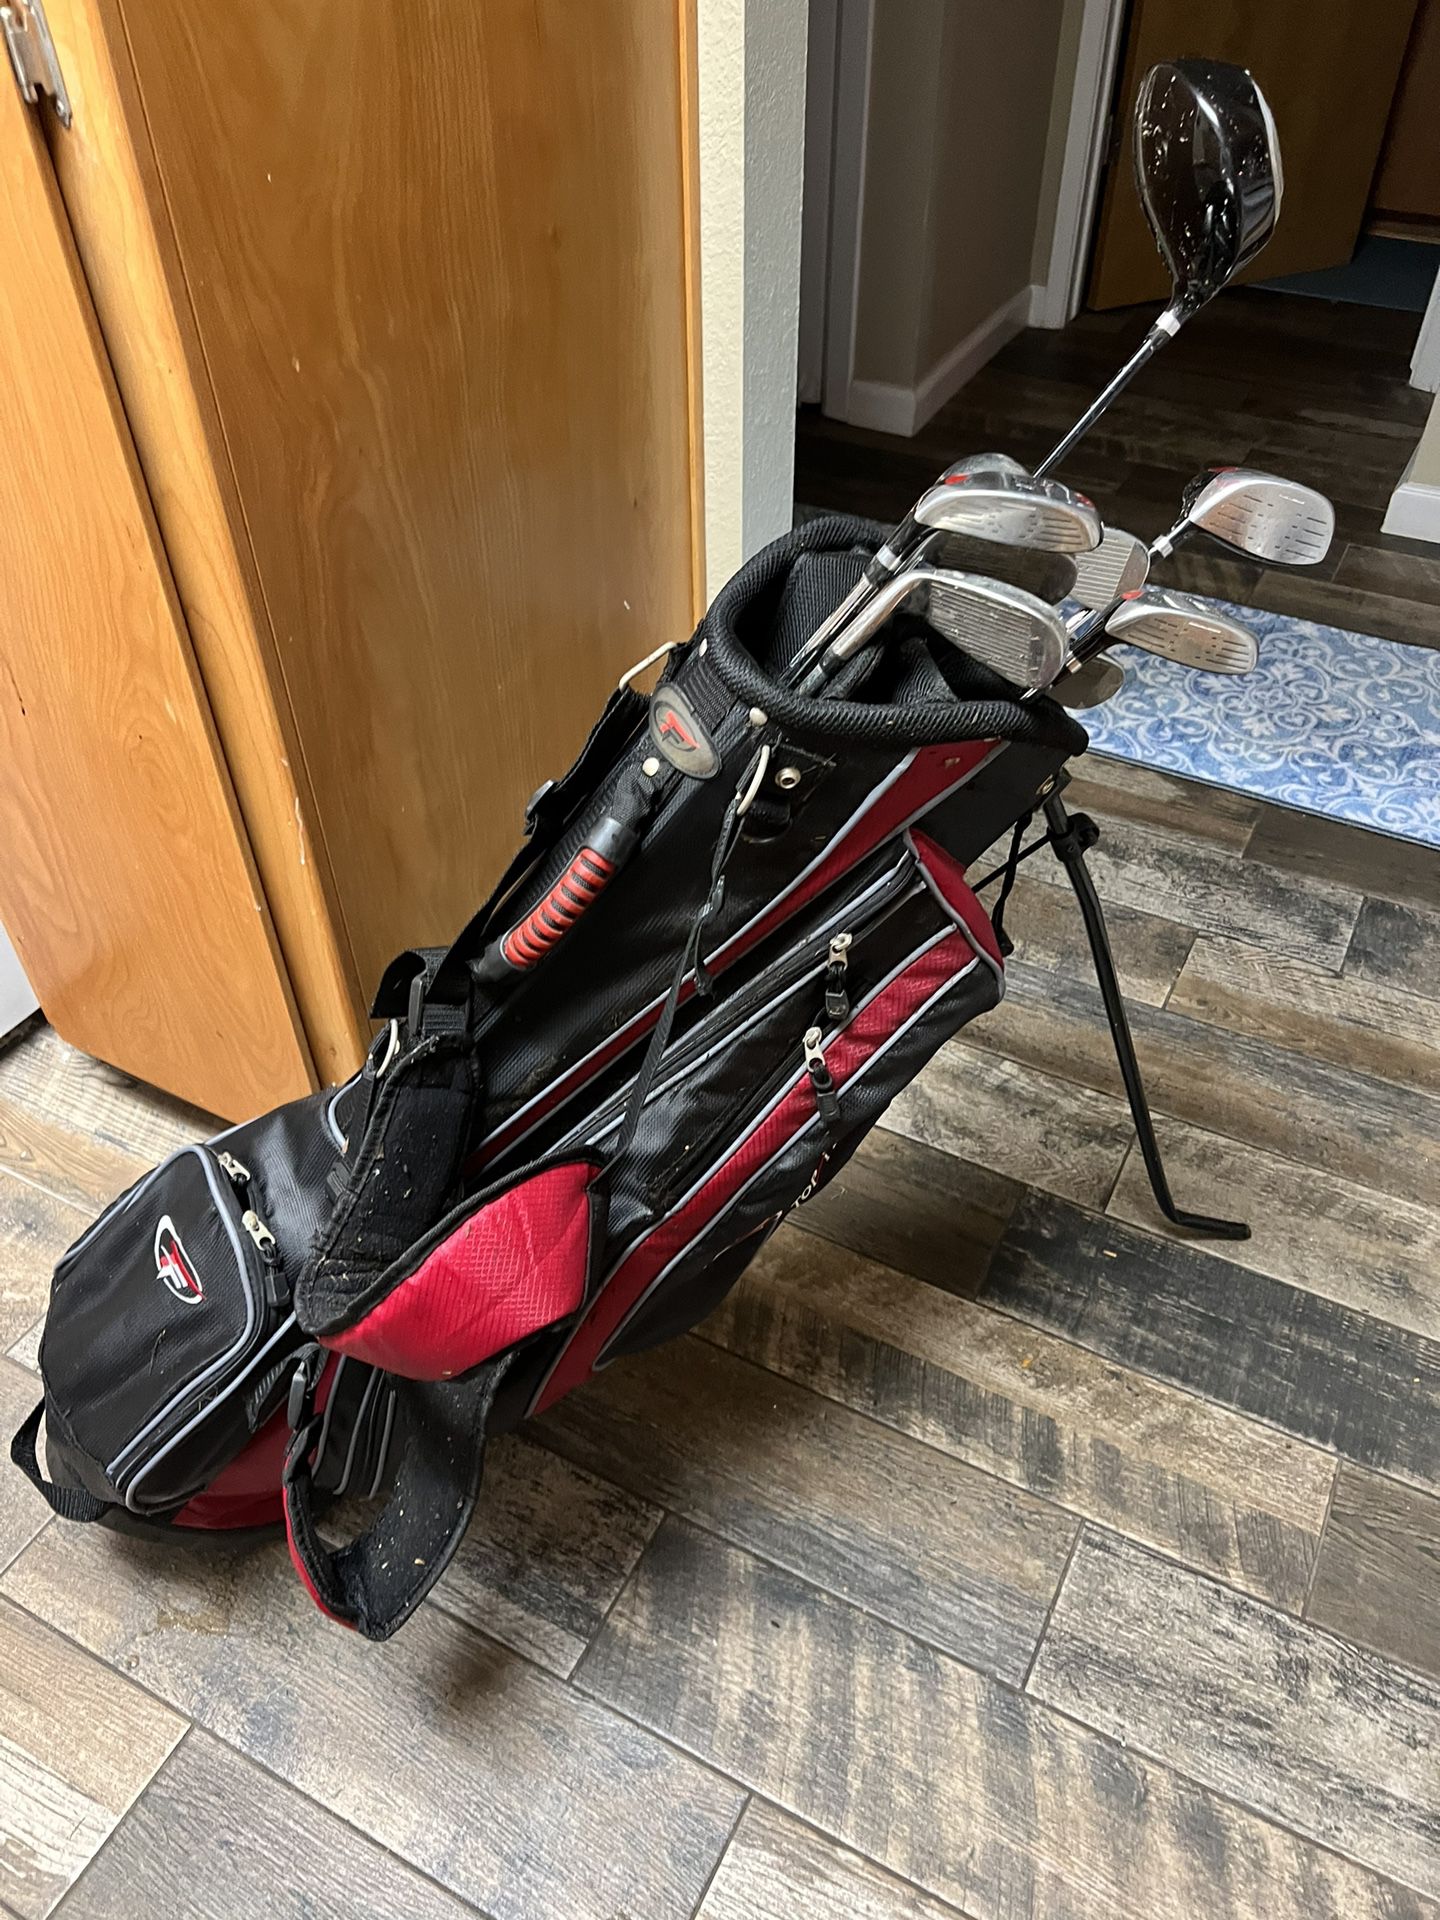 Top flight, golf bag, and clubs.